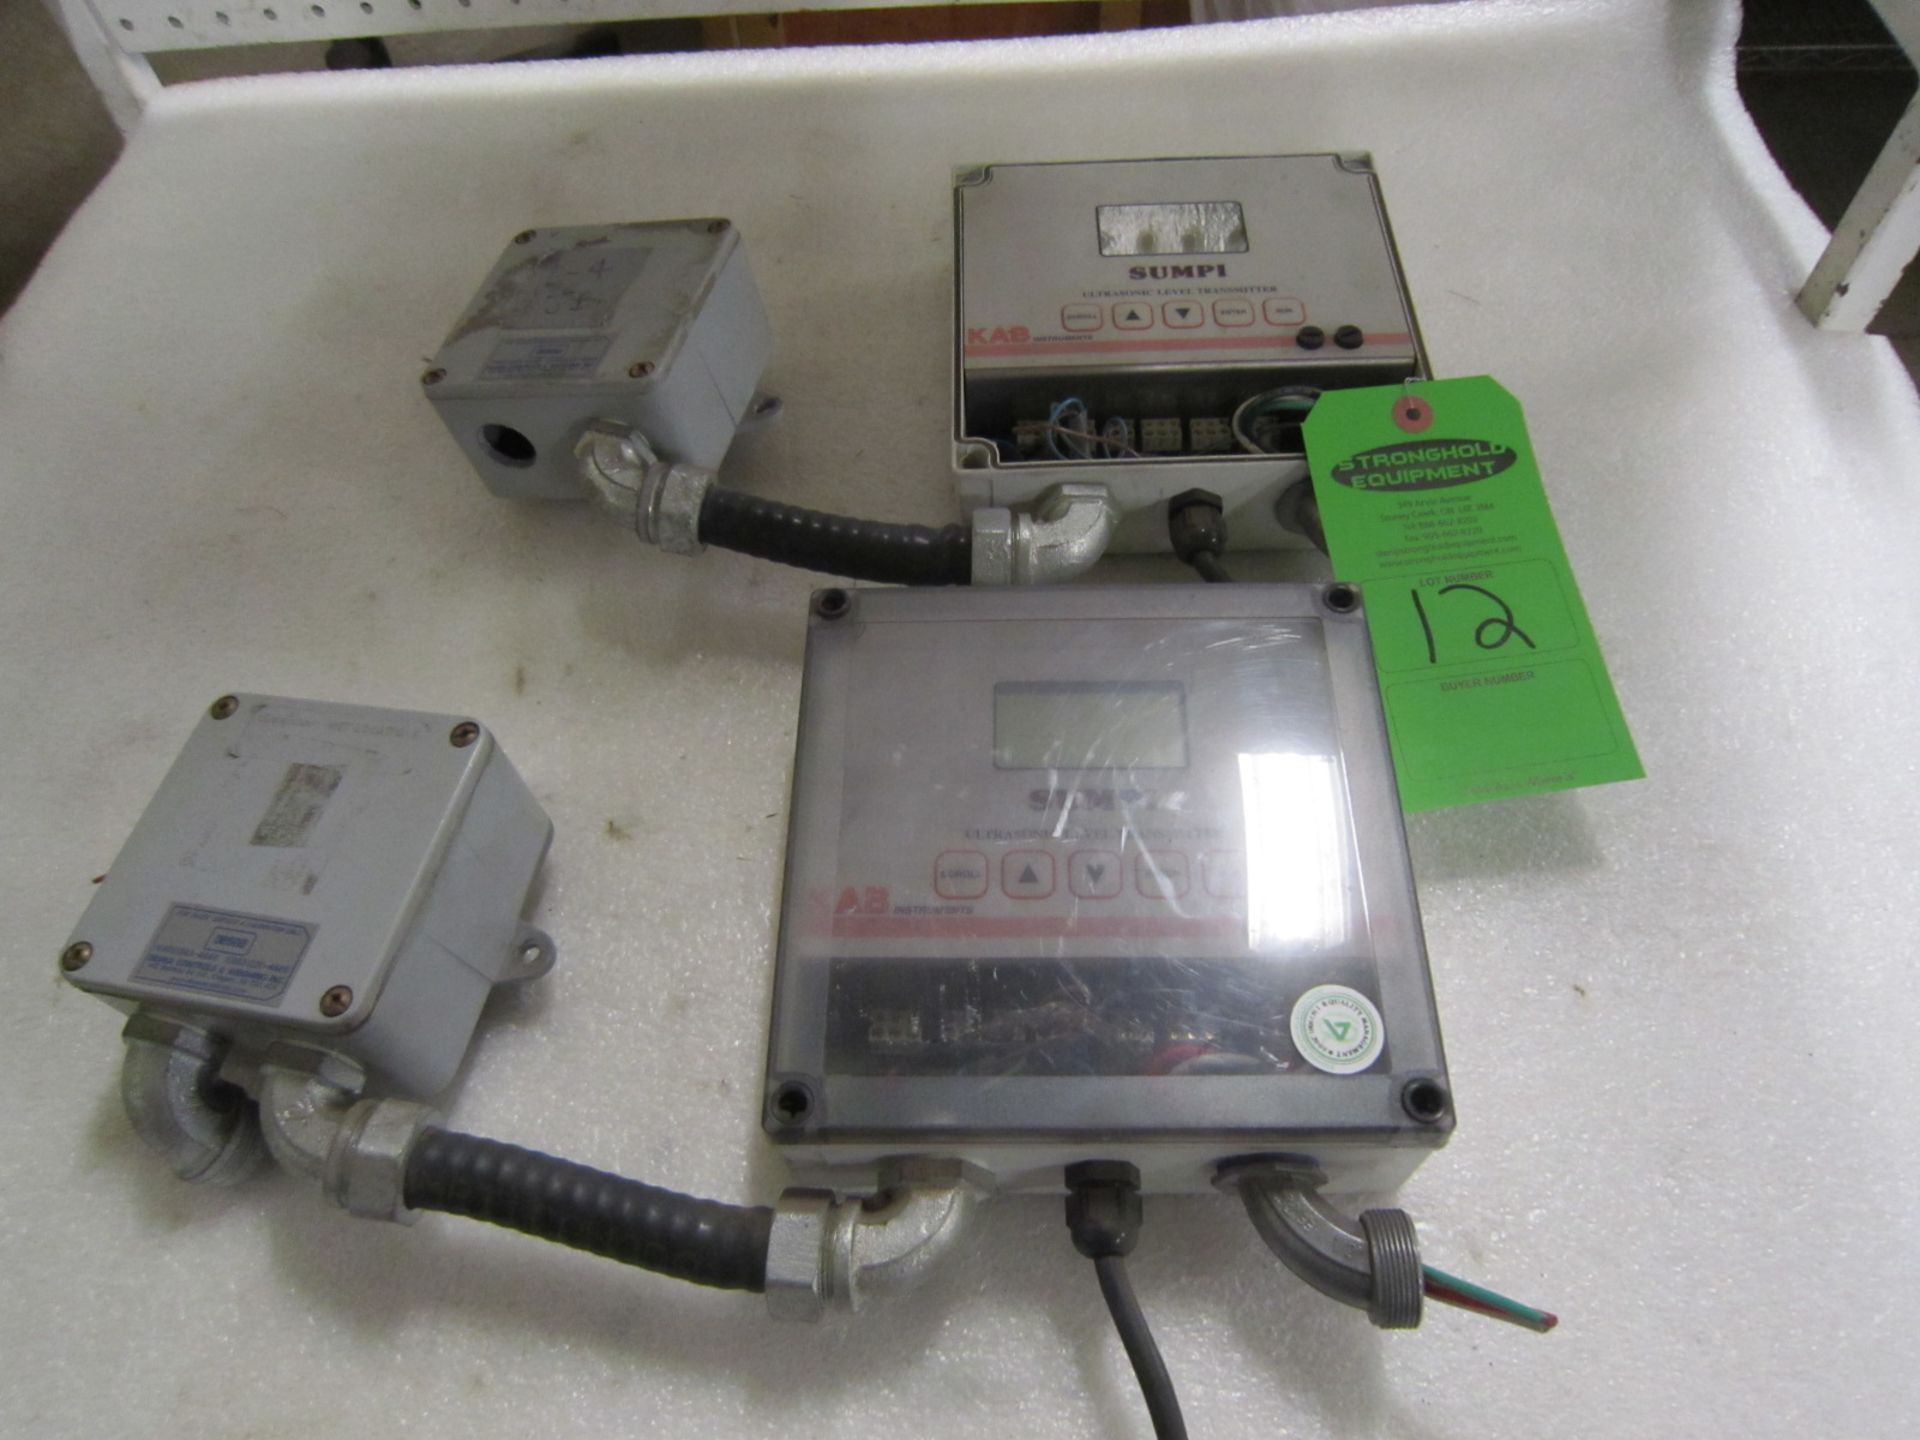 Lot of 2 KAB Instruments Sumpi Ultrasonic Level Transmitter